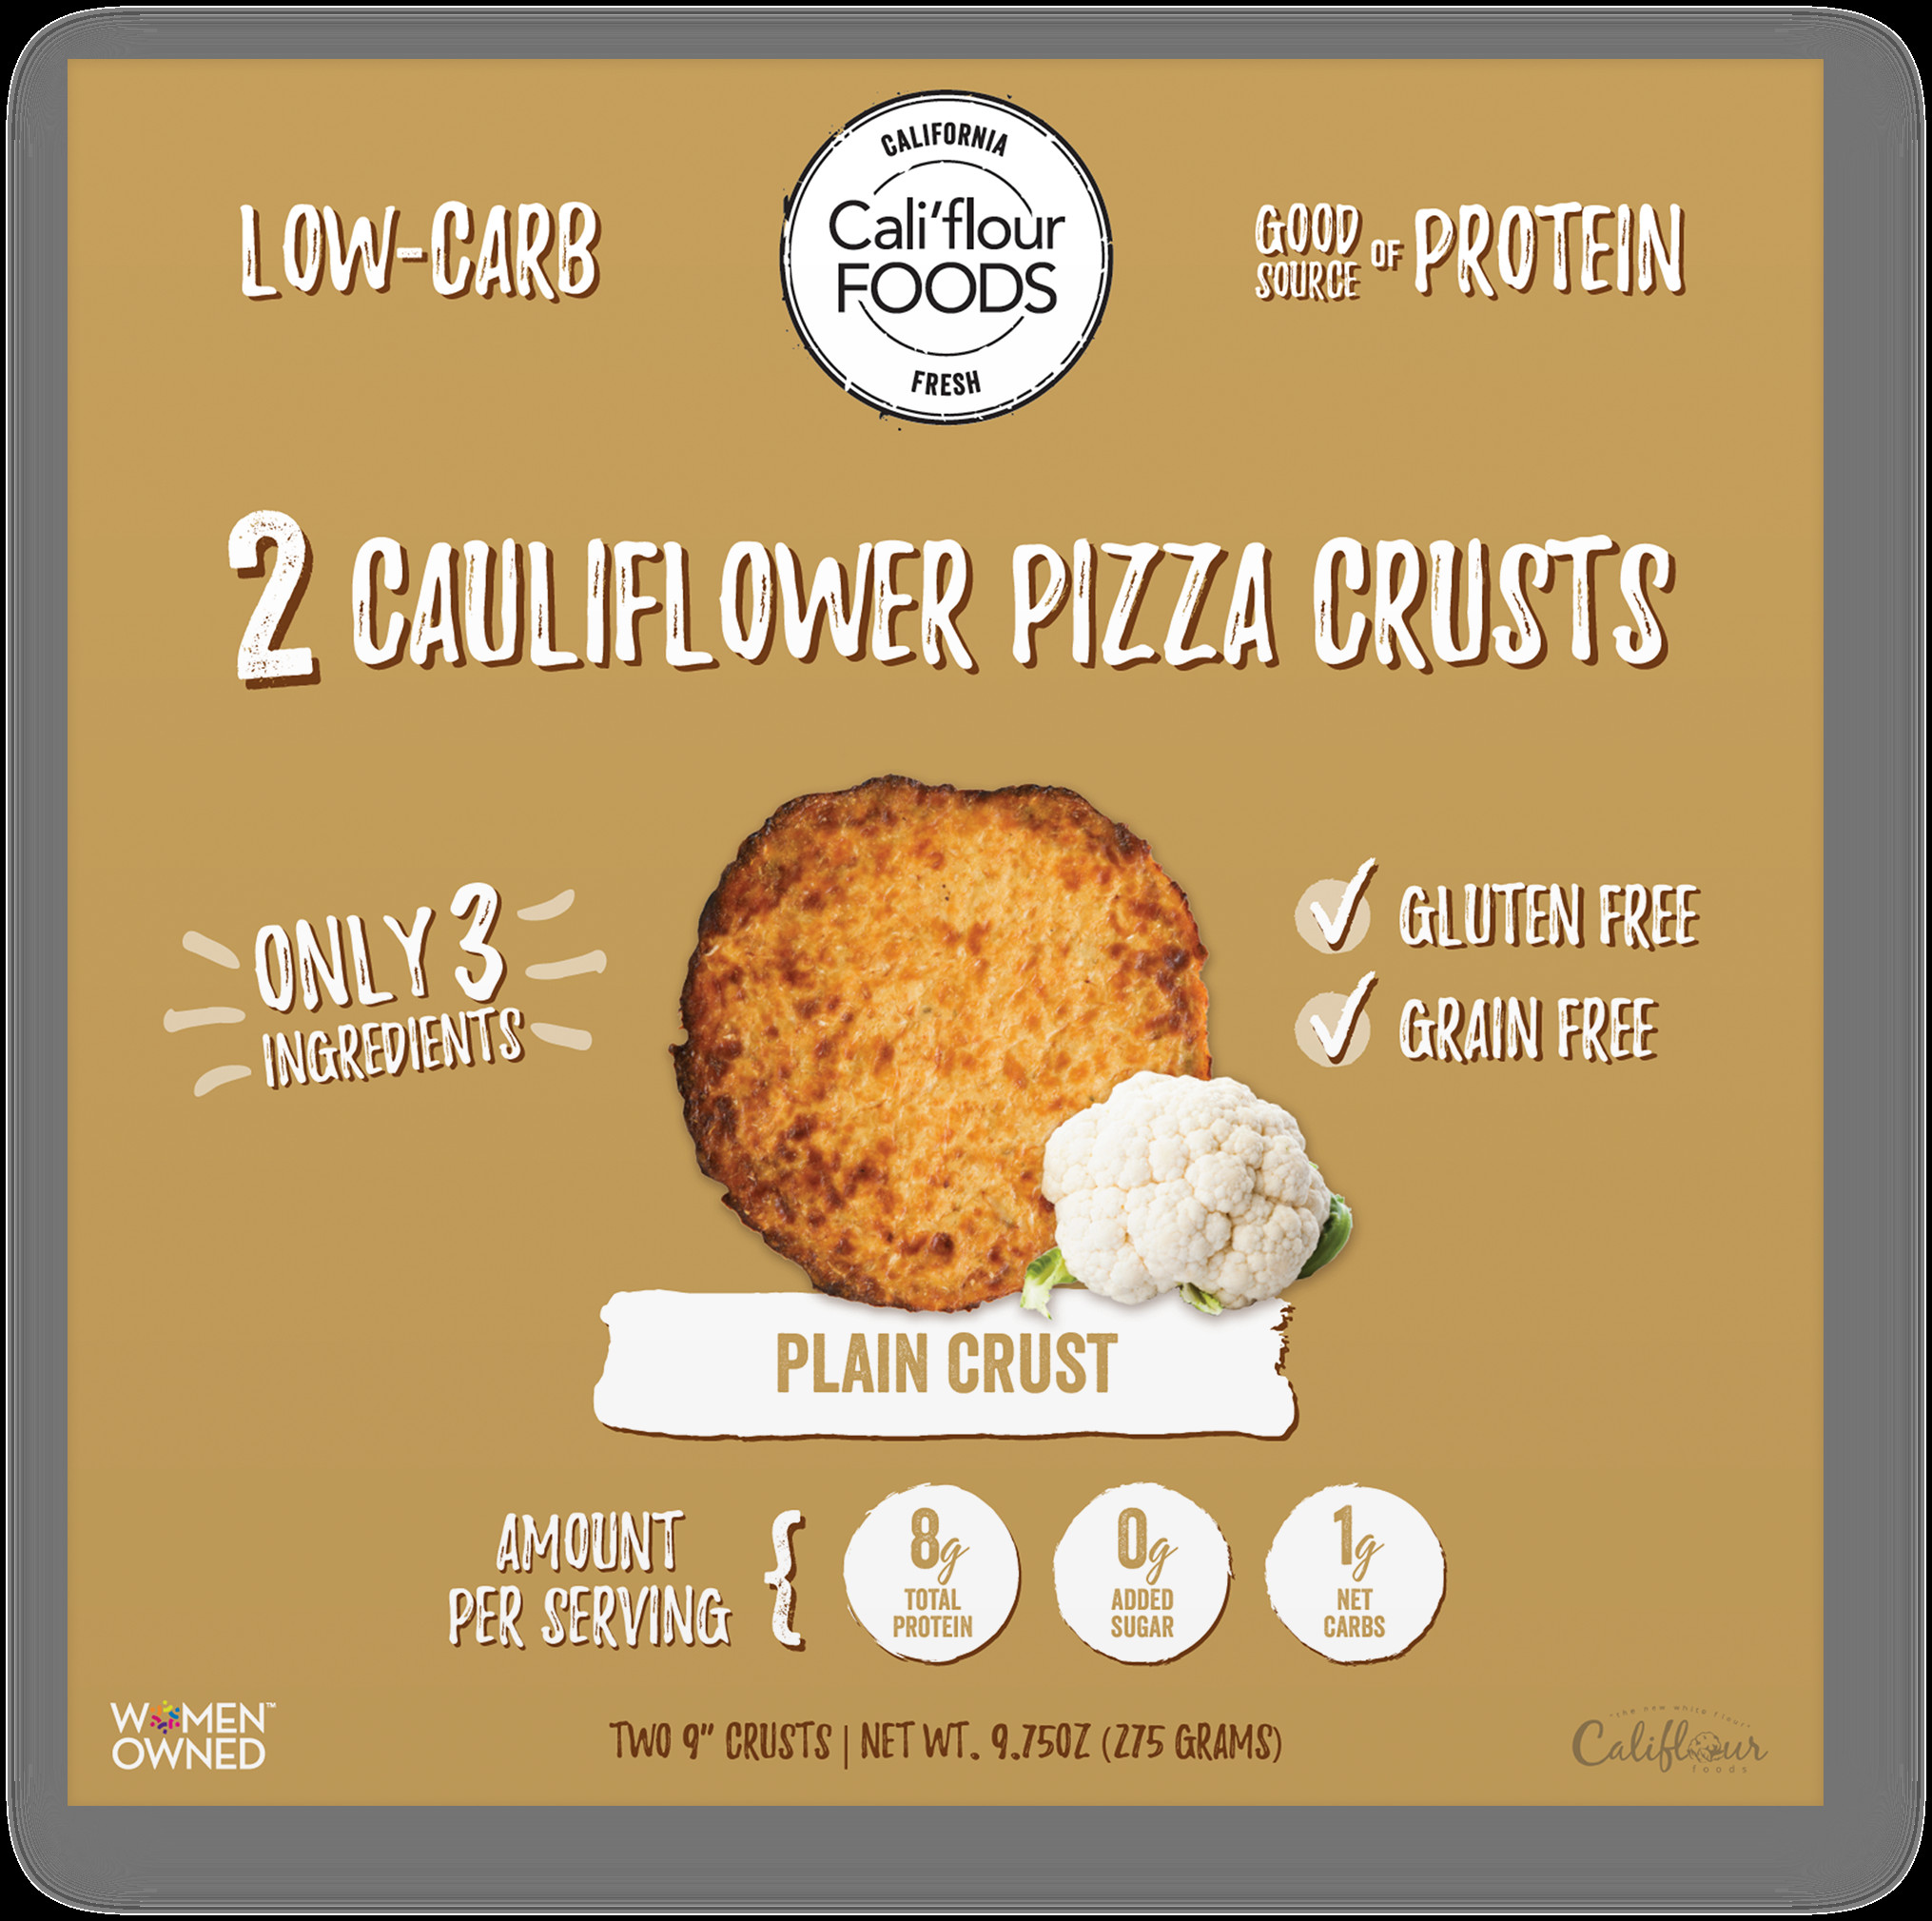 Cauliflower Pizza Crust Walmart
 Cali flour Foods 2 Cauliflower Pizza Crusts Plain Crust